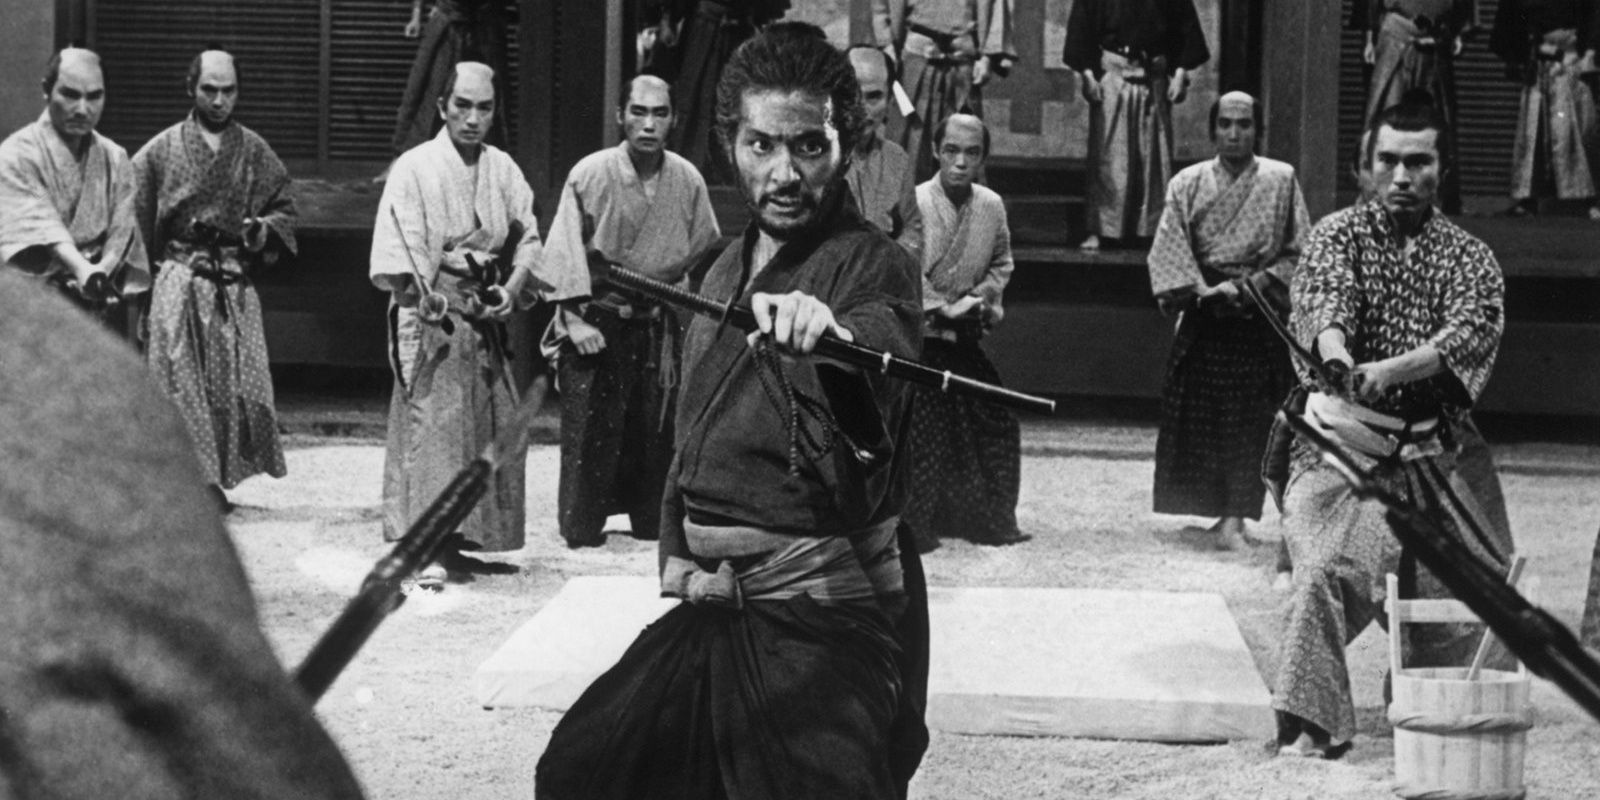 Tsugumo Hanshiro showing his sword in Harakiri/Seppuku 1962